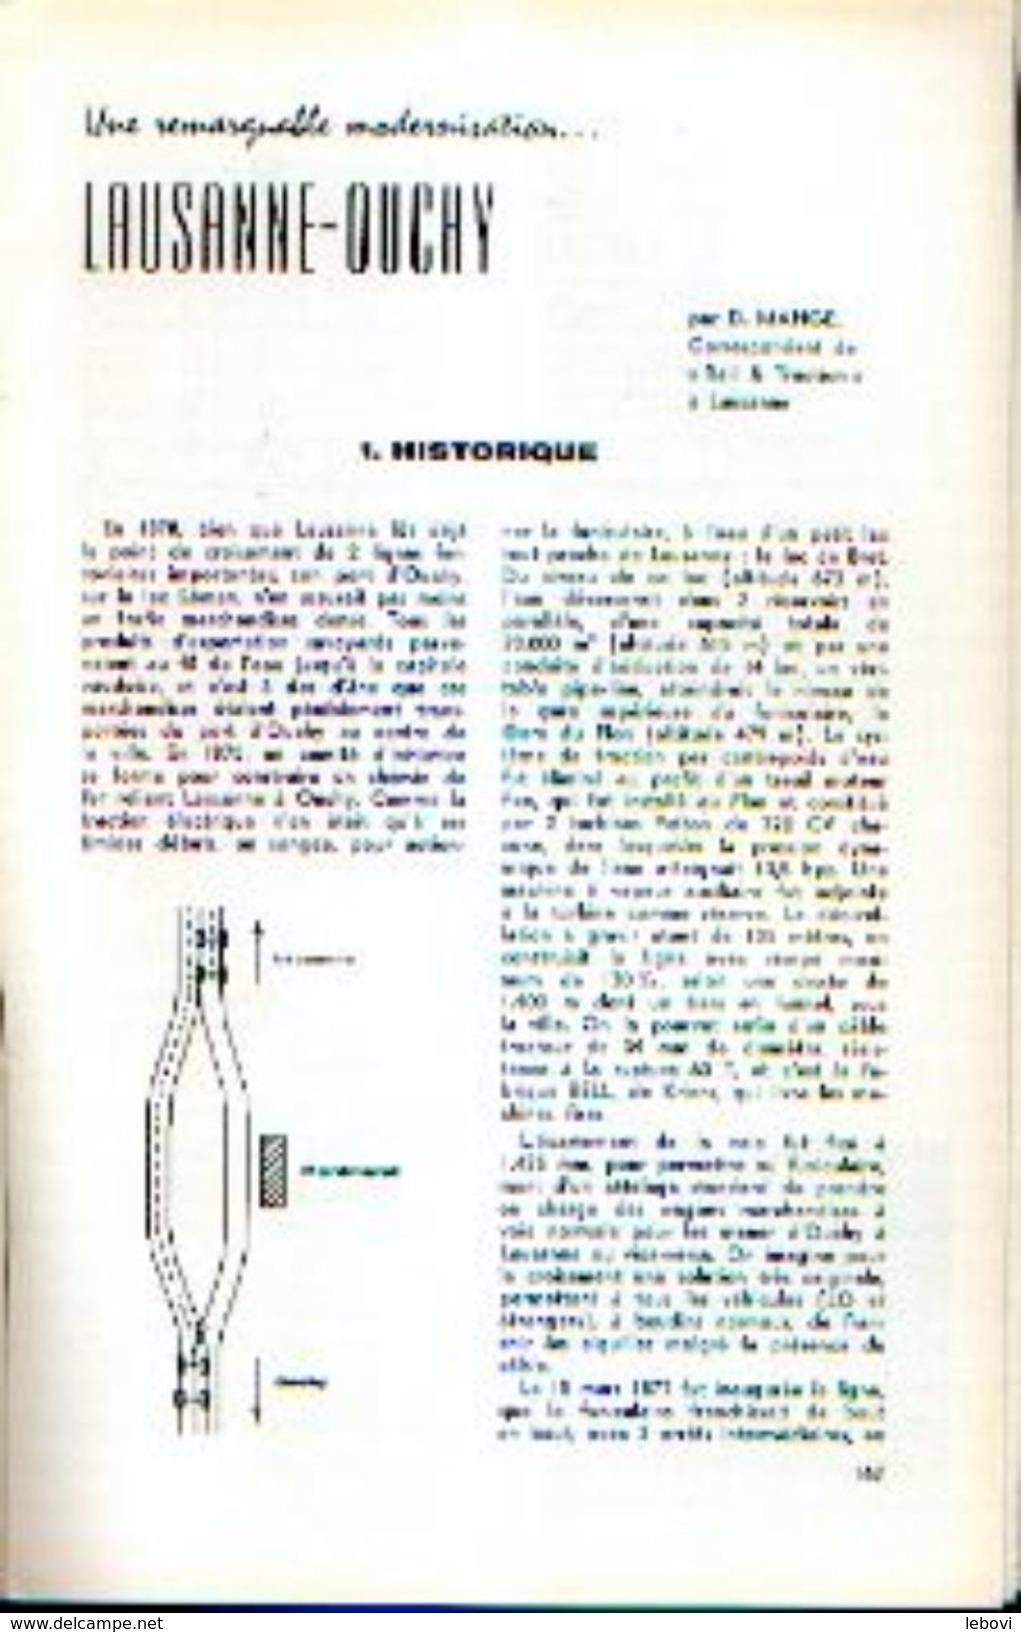 «Une Remarquable Modernisation….LAUSANNE-OUCHY» Article De 9 Pages In « RAIL ET TRACTION » N° 60 – 05-06/1959 - Chemin De Fer